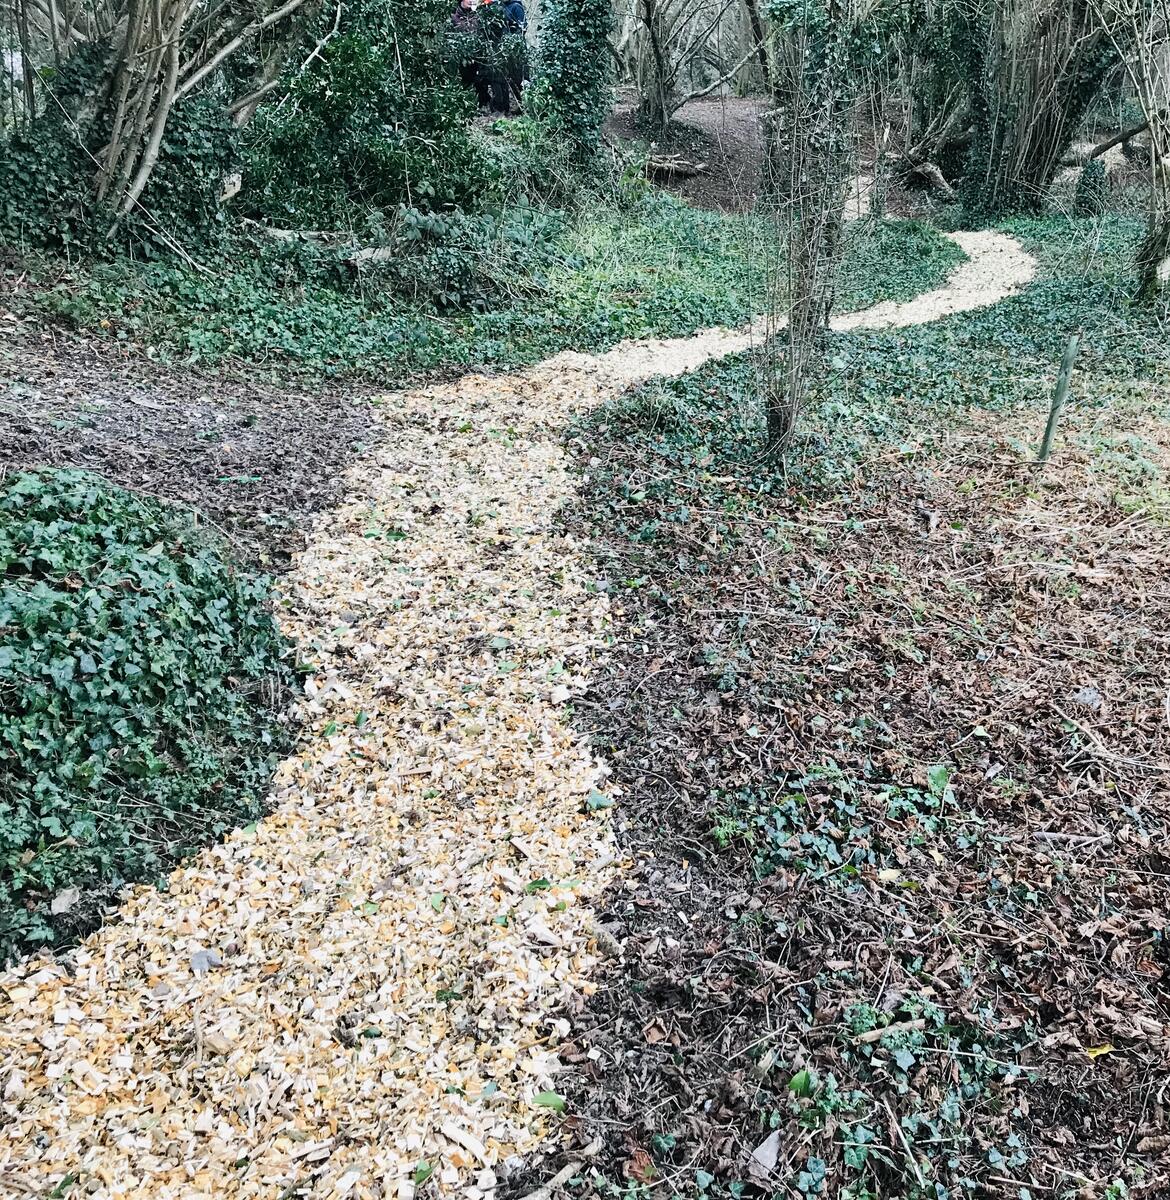 Hazel chippings spread on access path